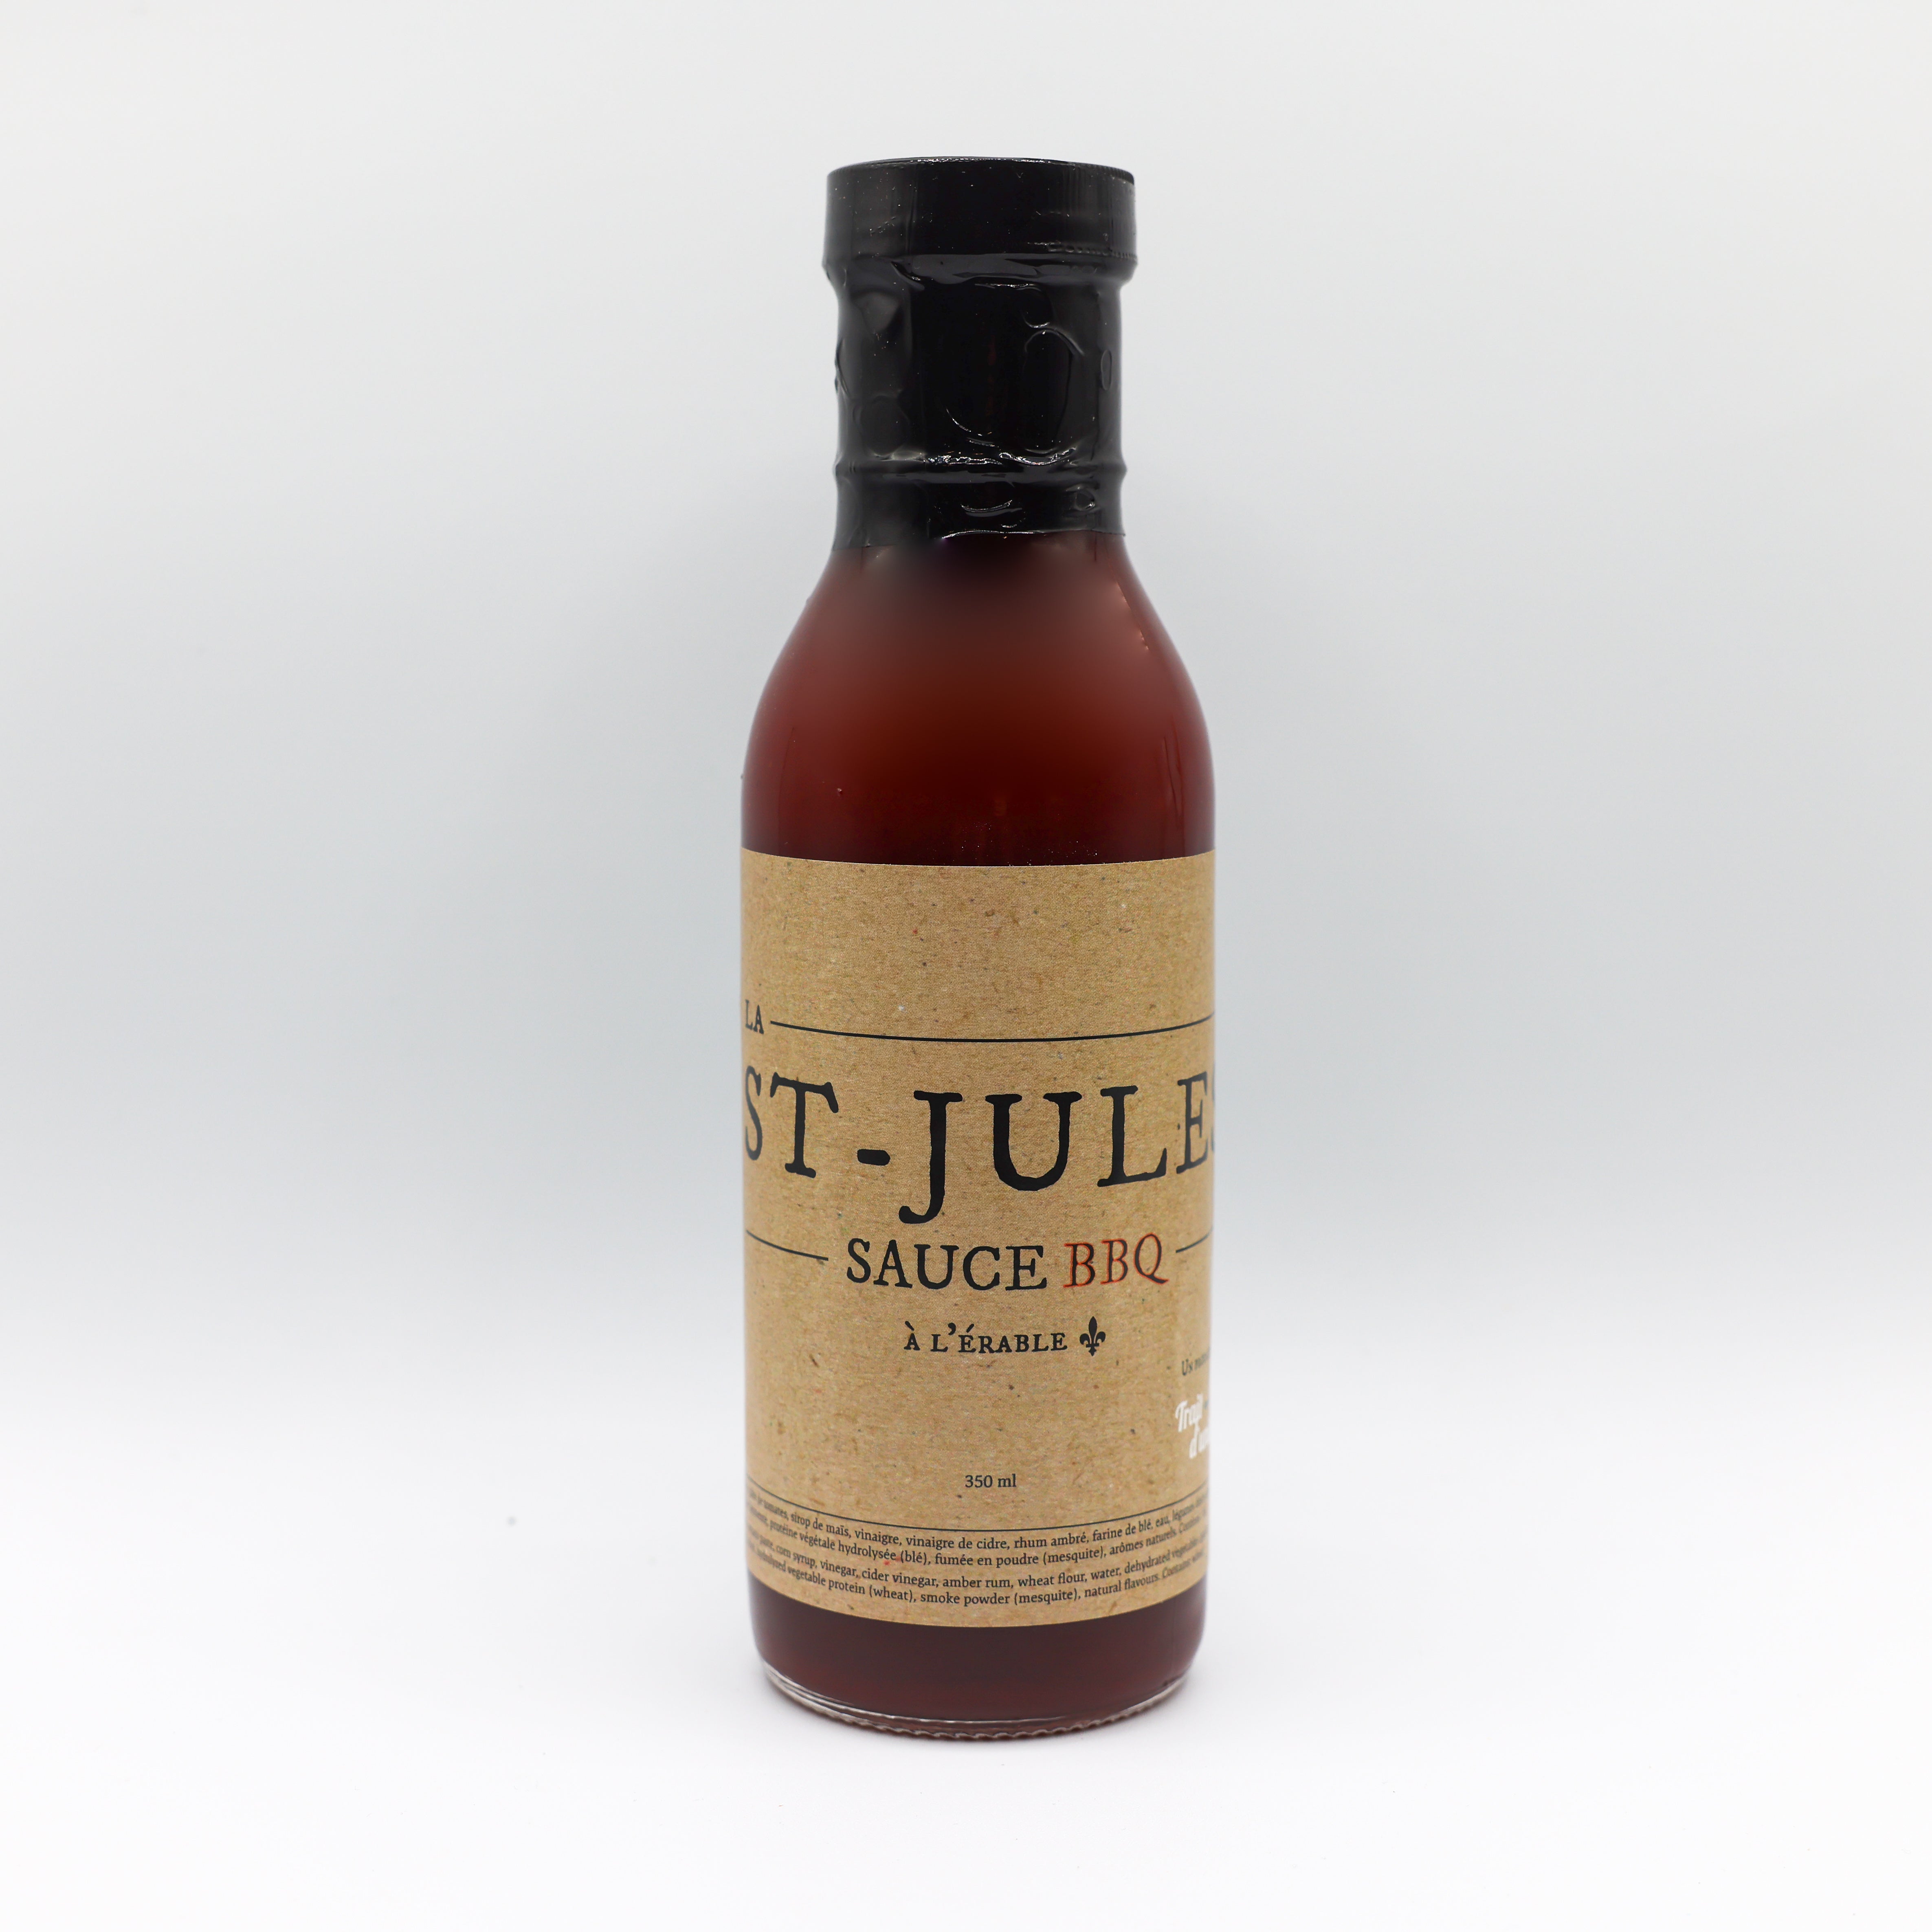 Saint-Jules sauce